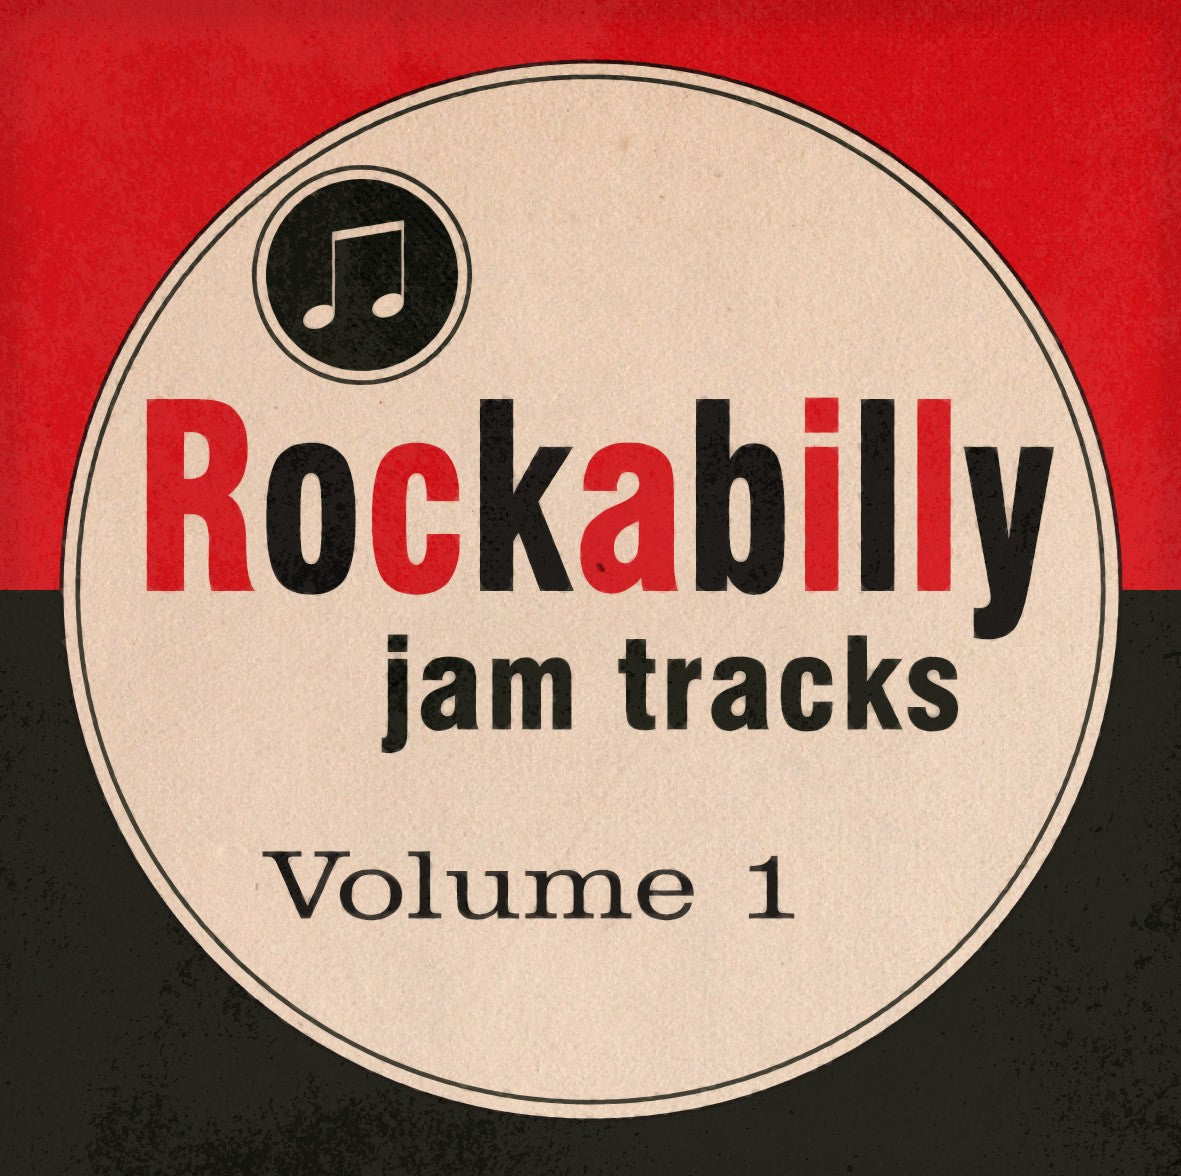 Rockabilly Jam Tracks Volume 1